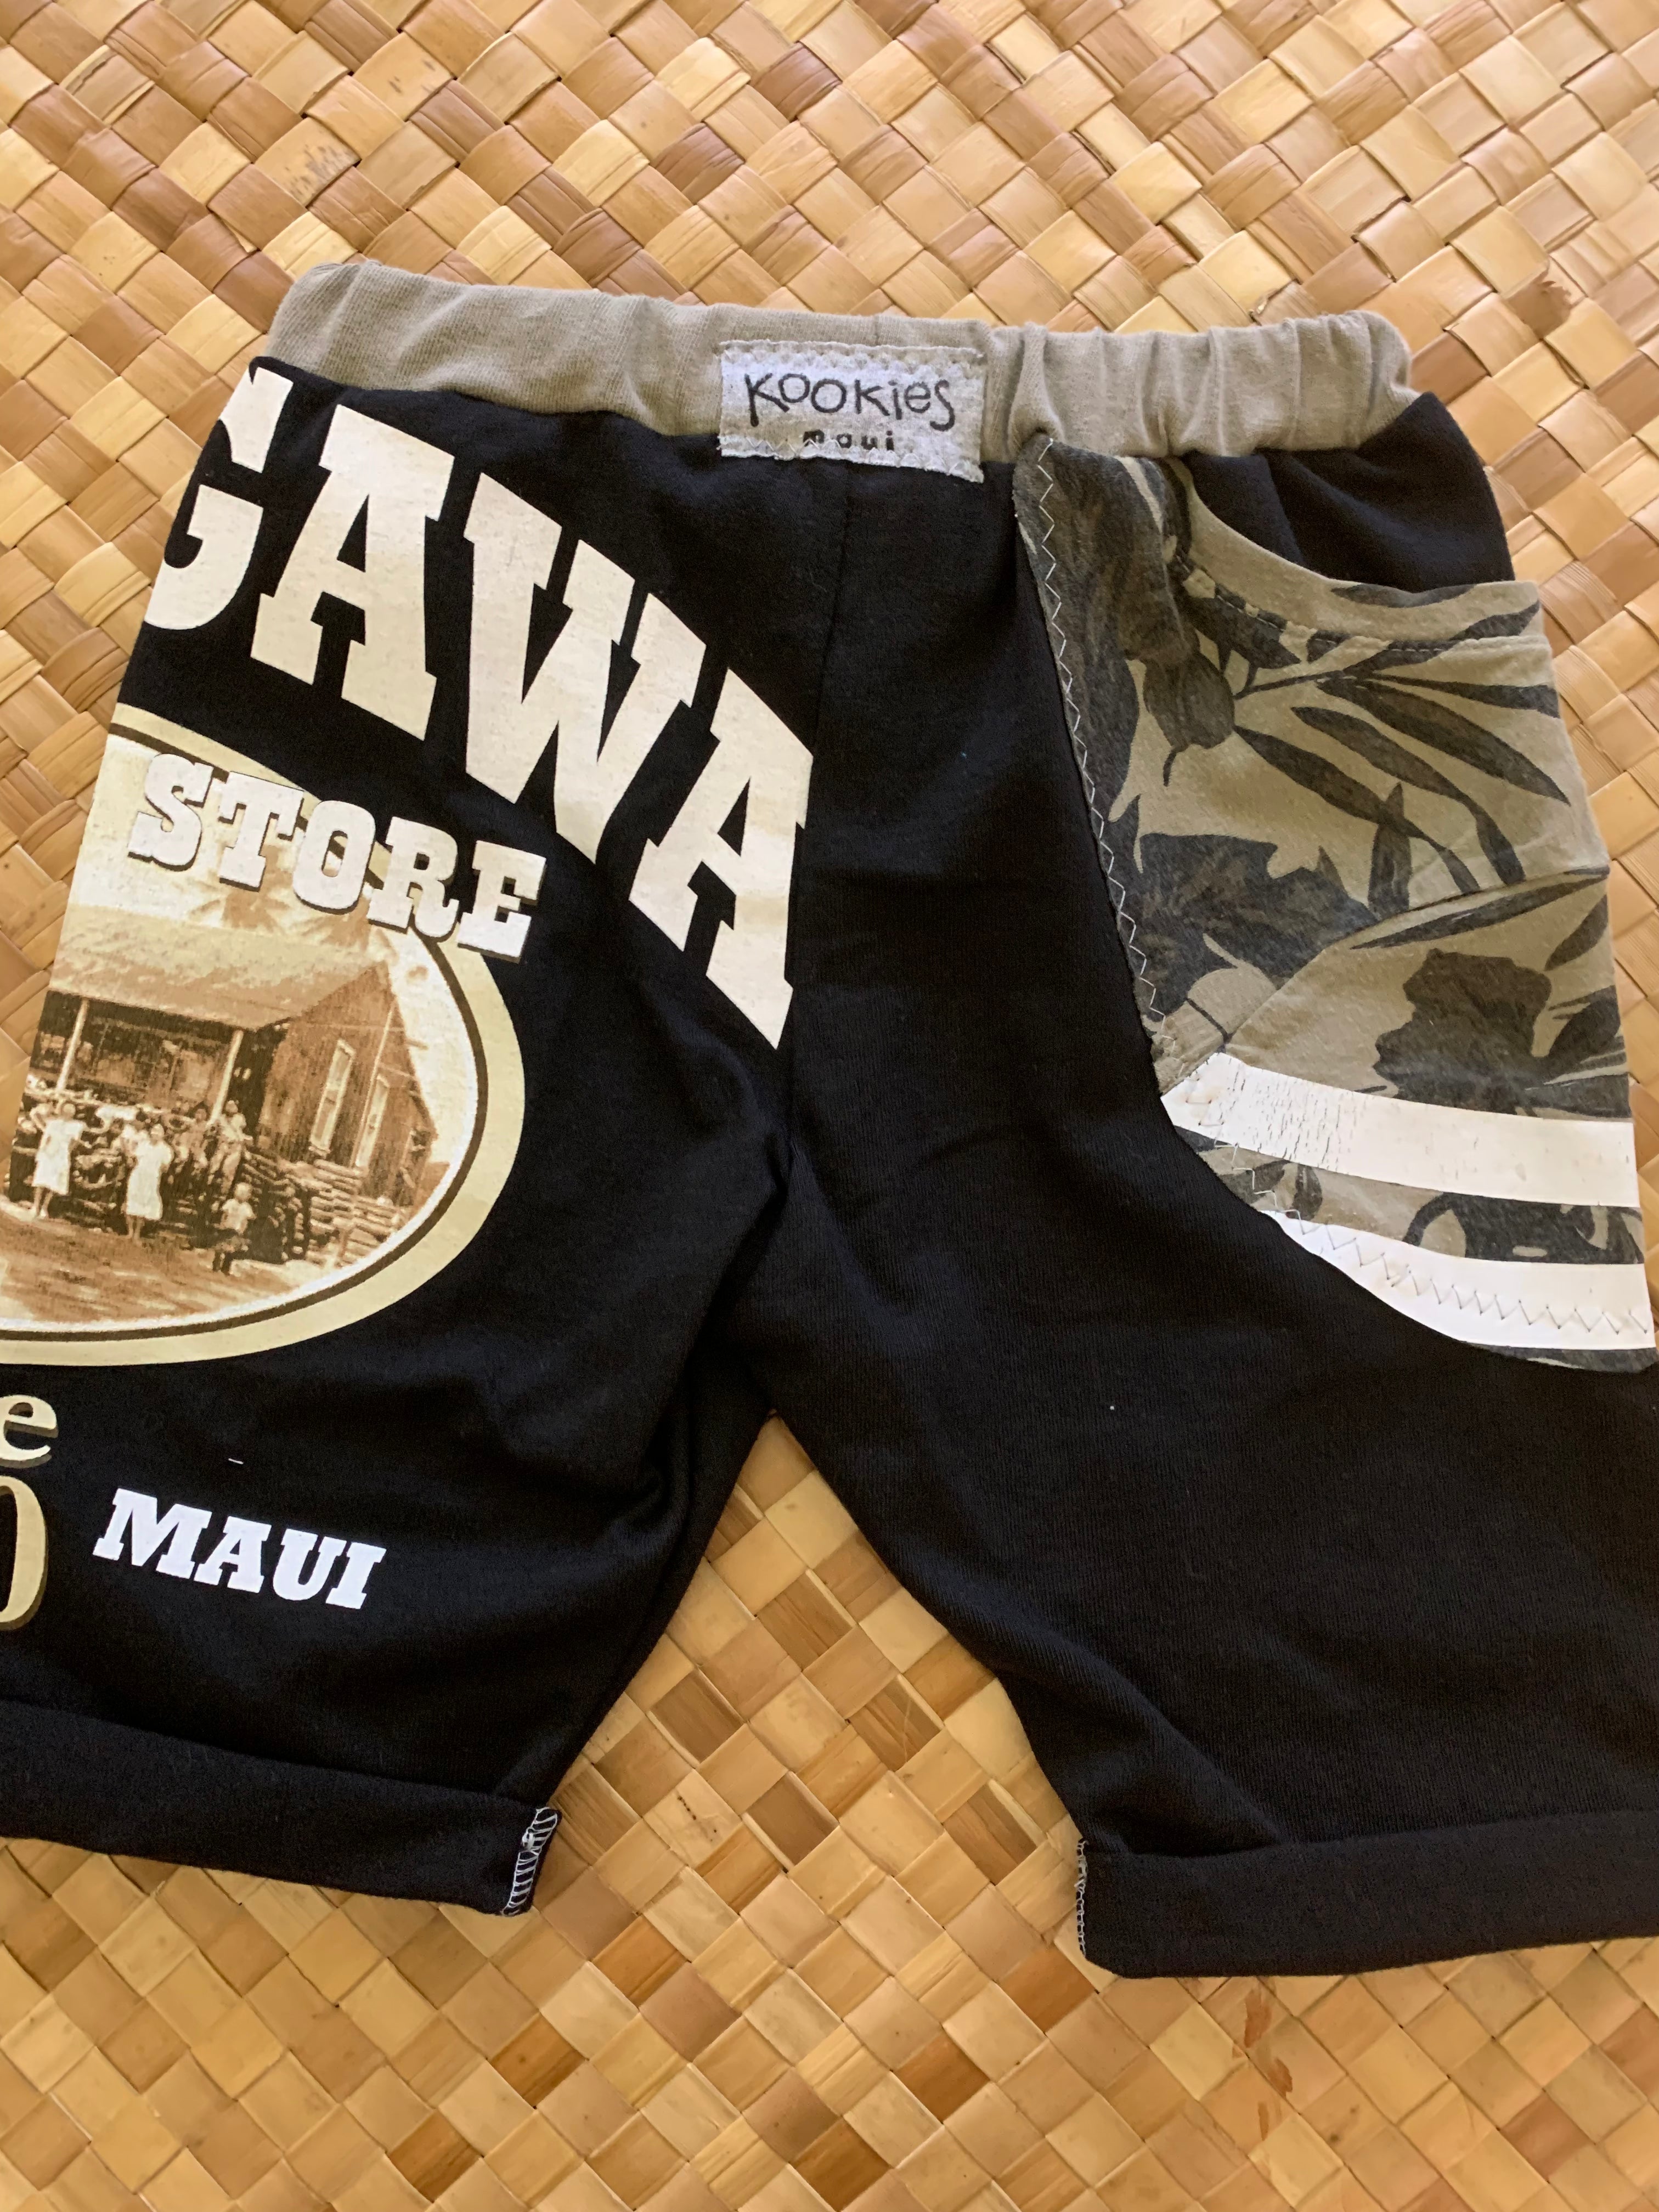 Kids Size 4 "Black Hasegawa General Store" Beach Comber Shorts